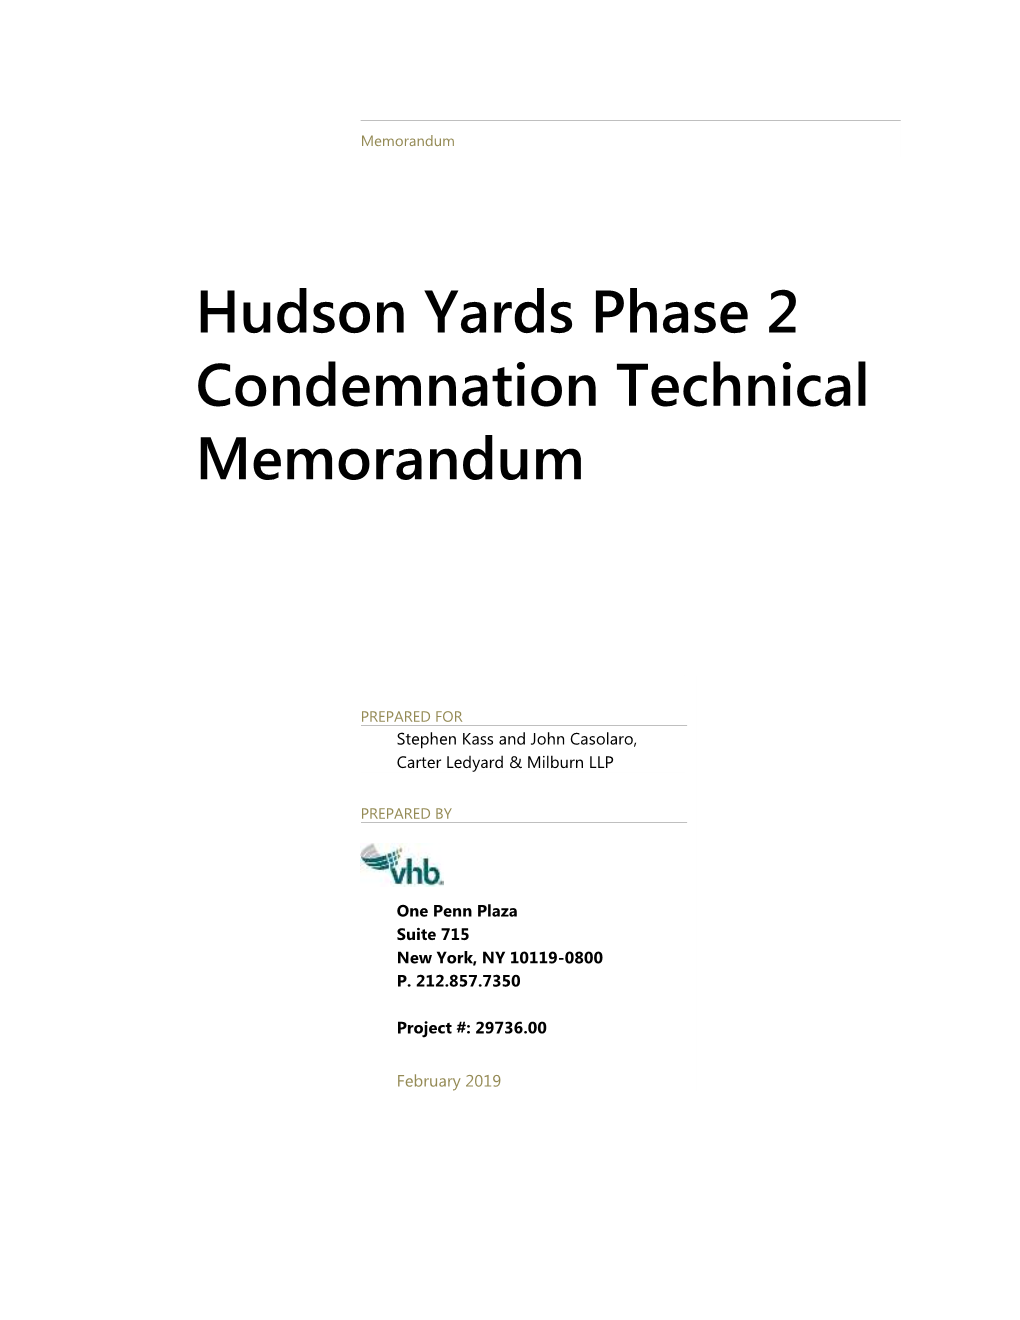 Hudson Yards Phase 2 Condemnation Technical Memorandum